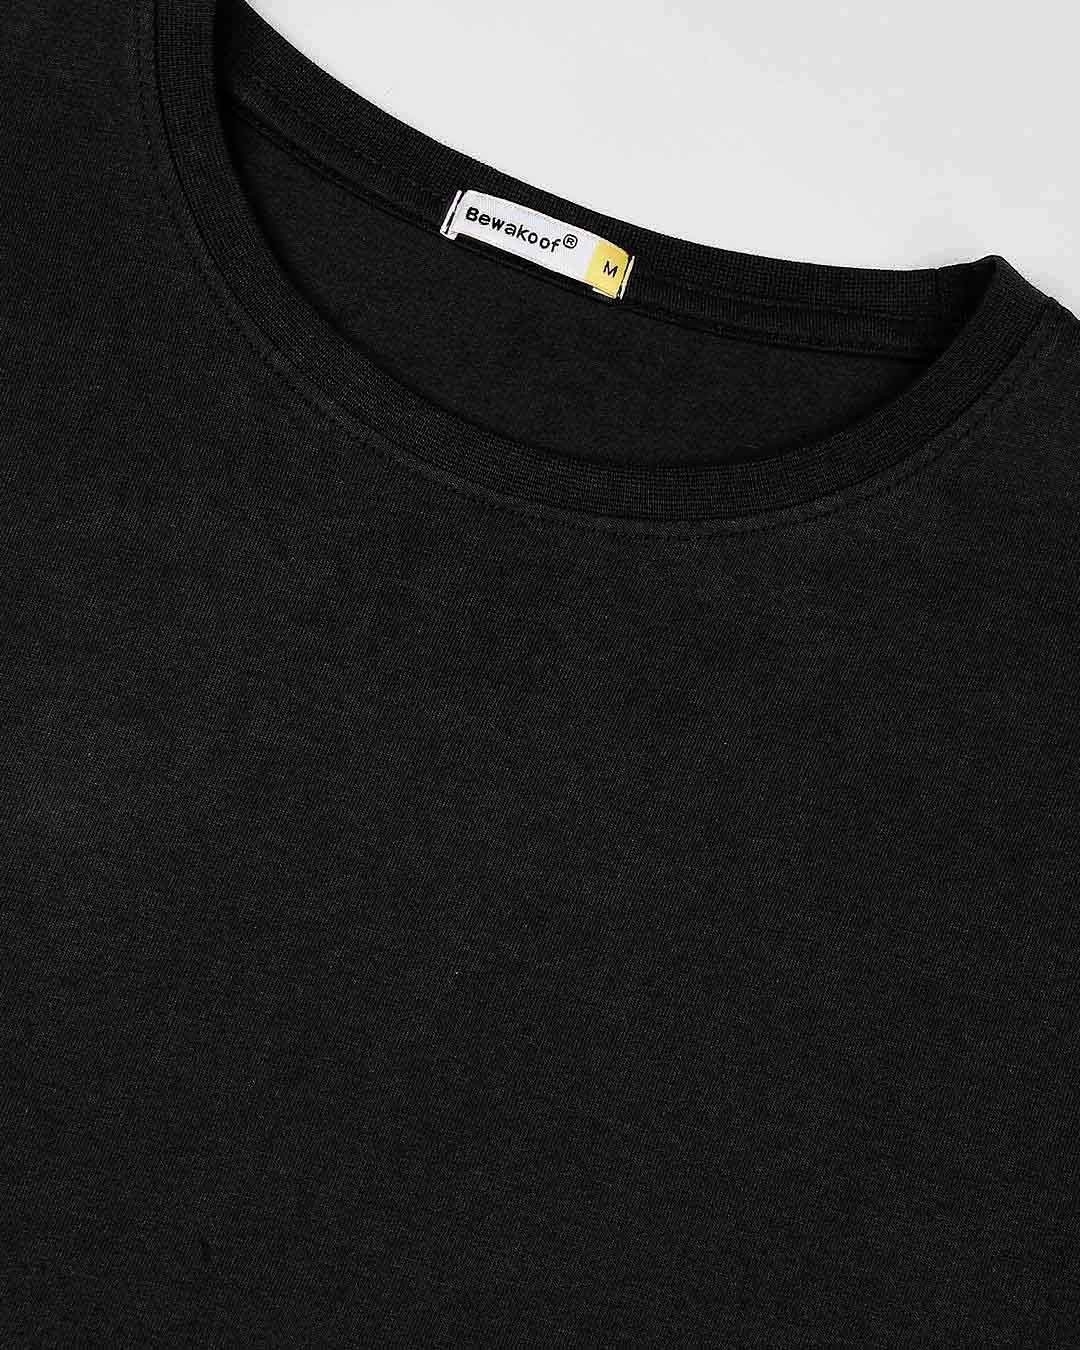 Shop Game Over Minimal Full Sleeve T-Shirt Black